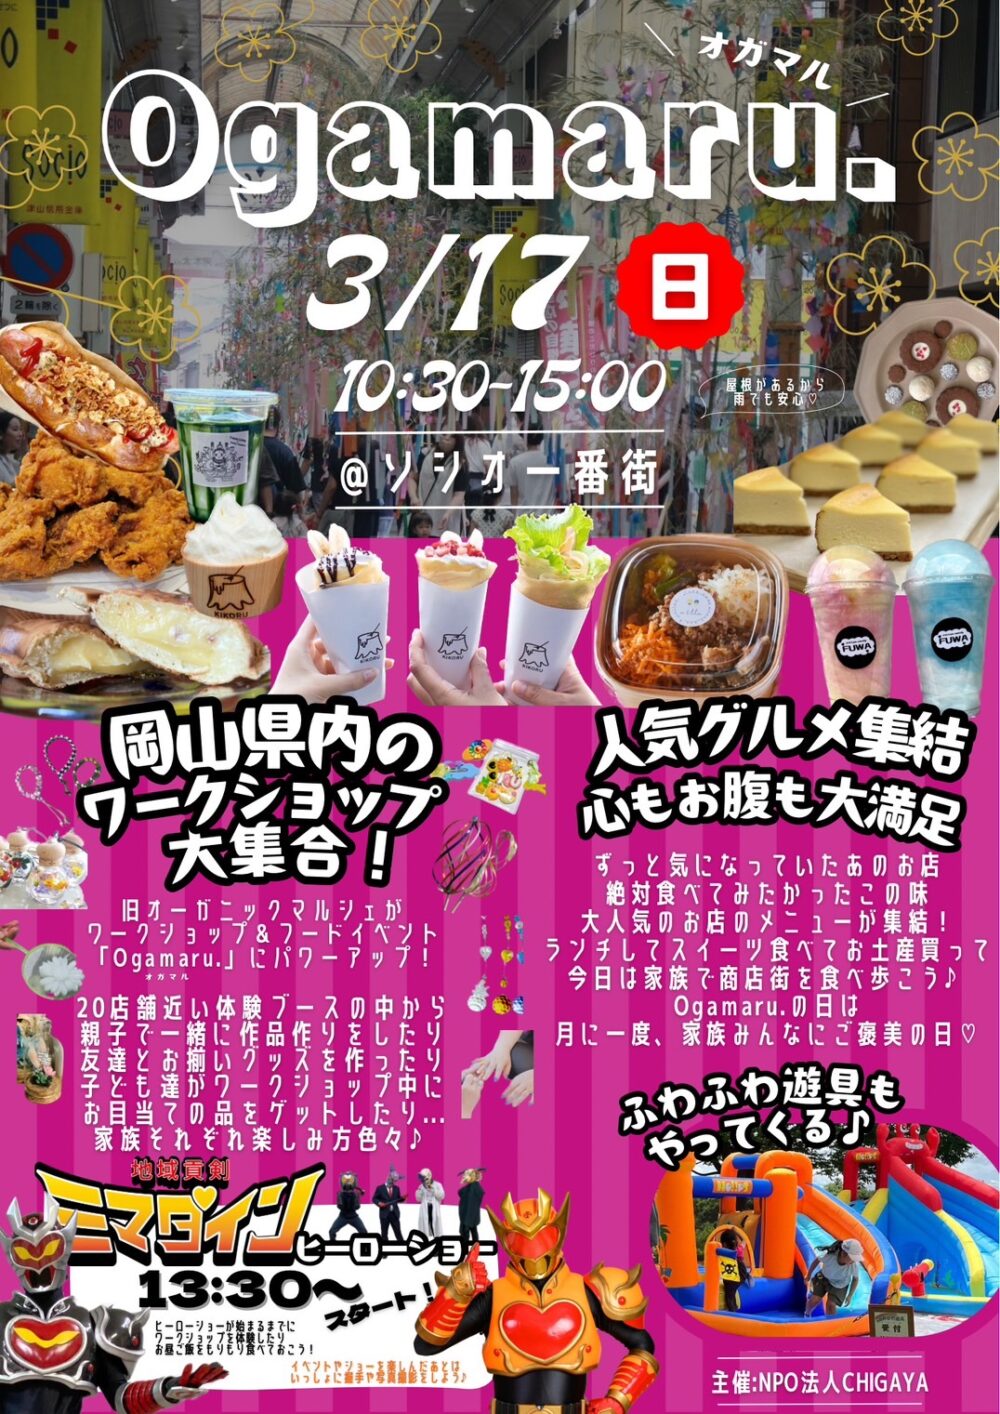 Tsuyama City event information